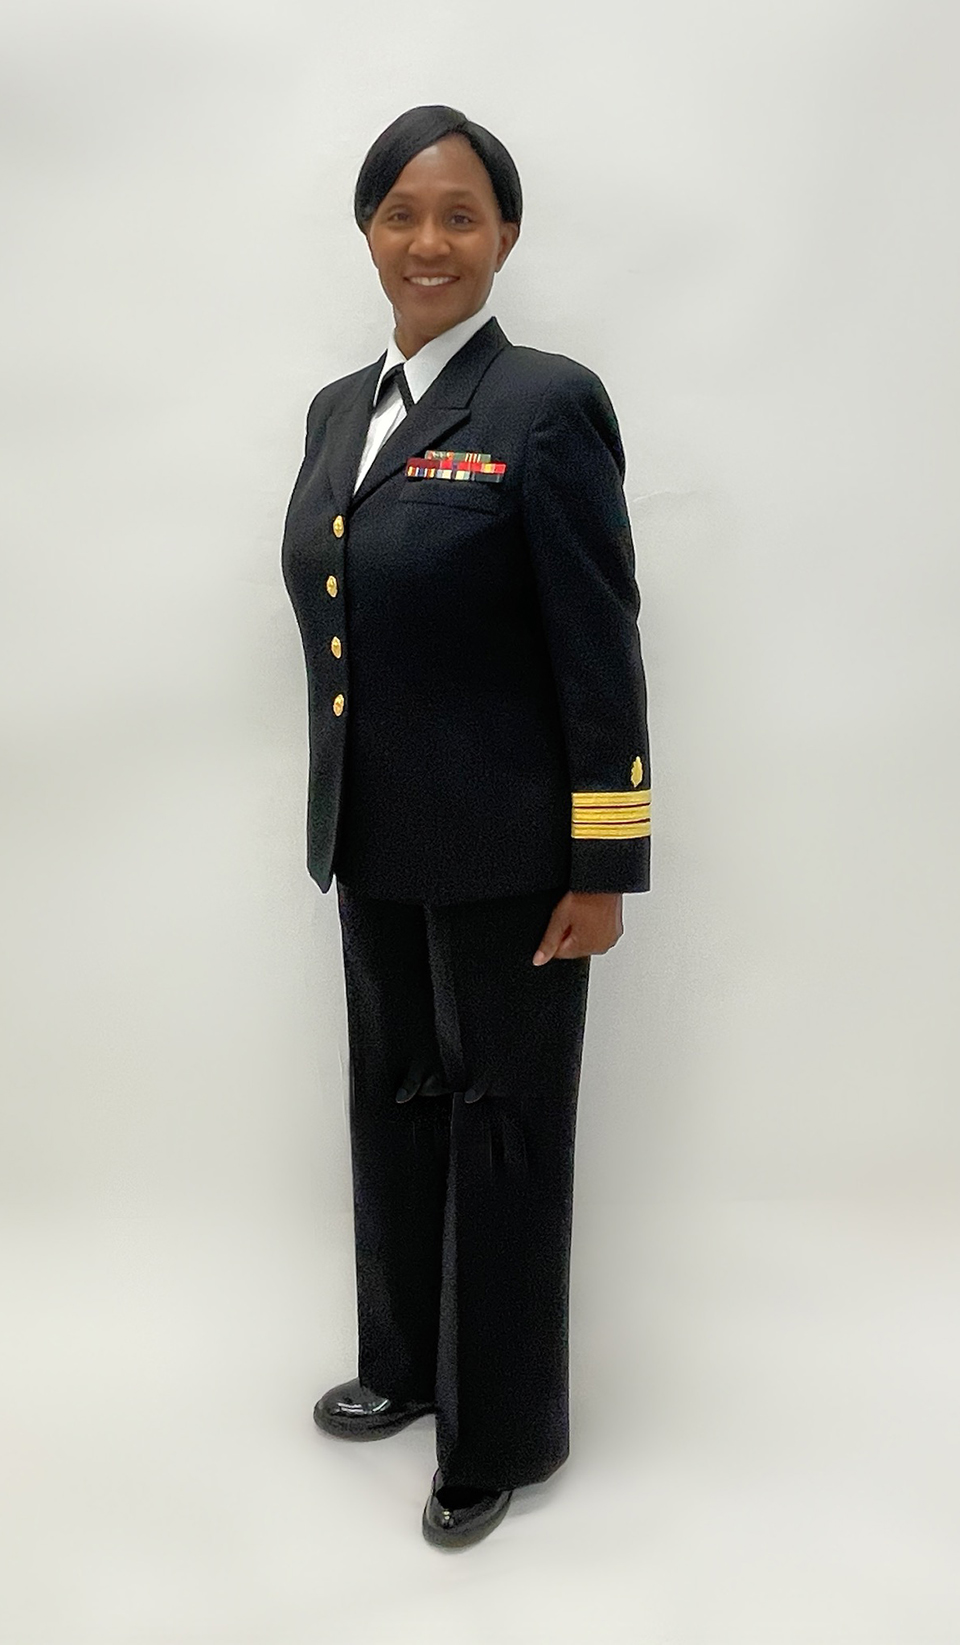 Dr. Avis Simon, commander in the U.S. Navy Nurse Corps